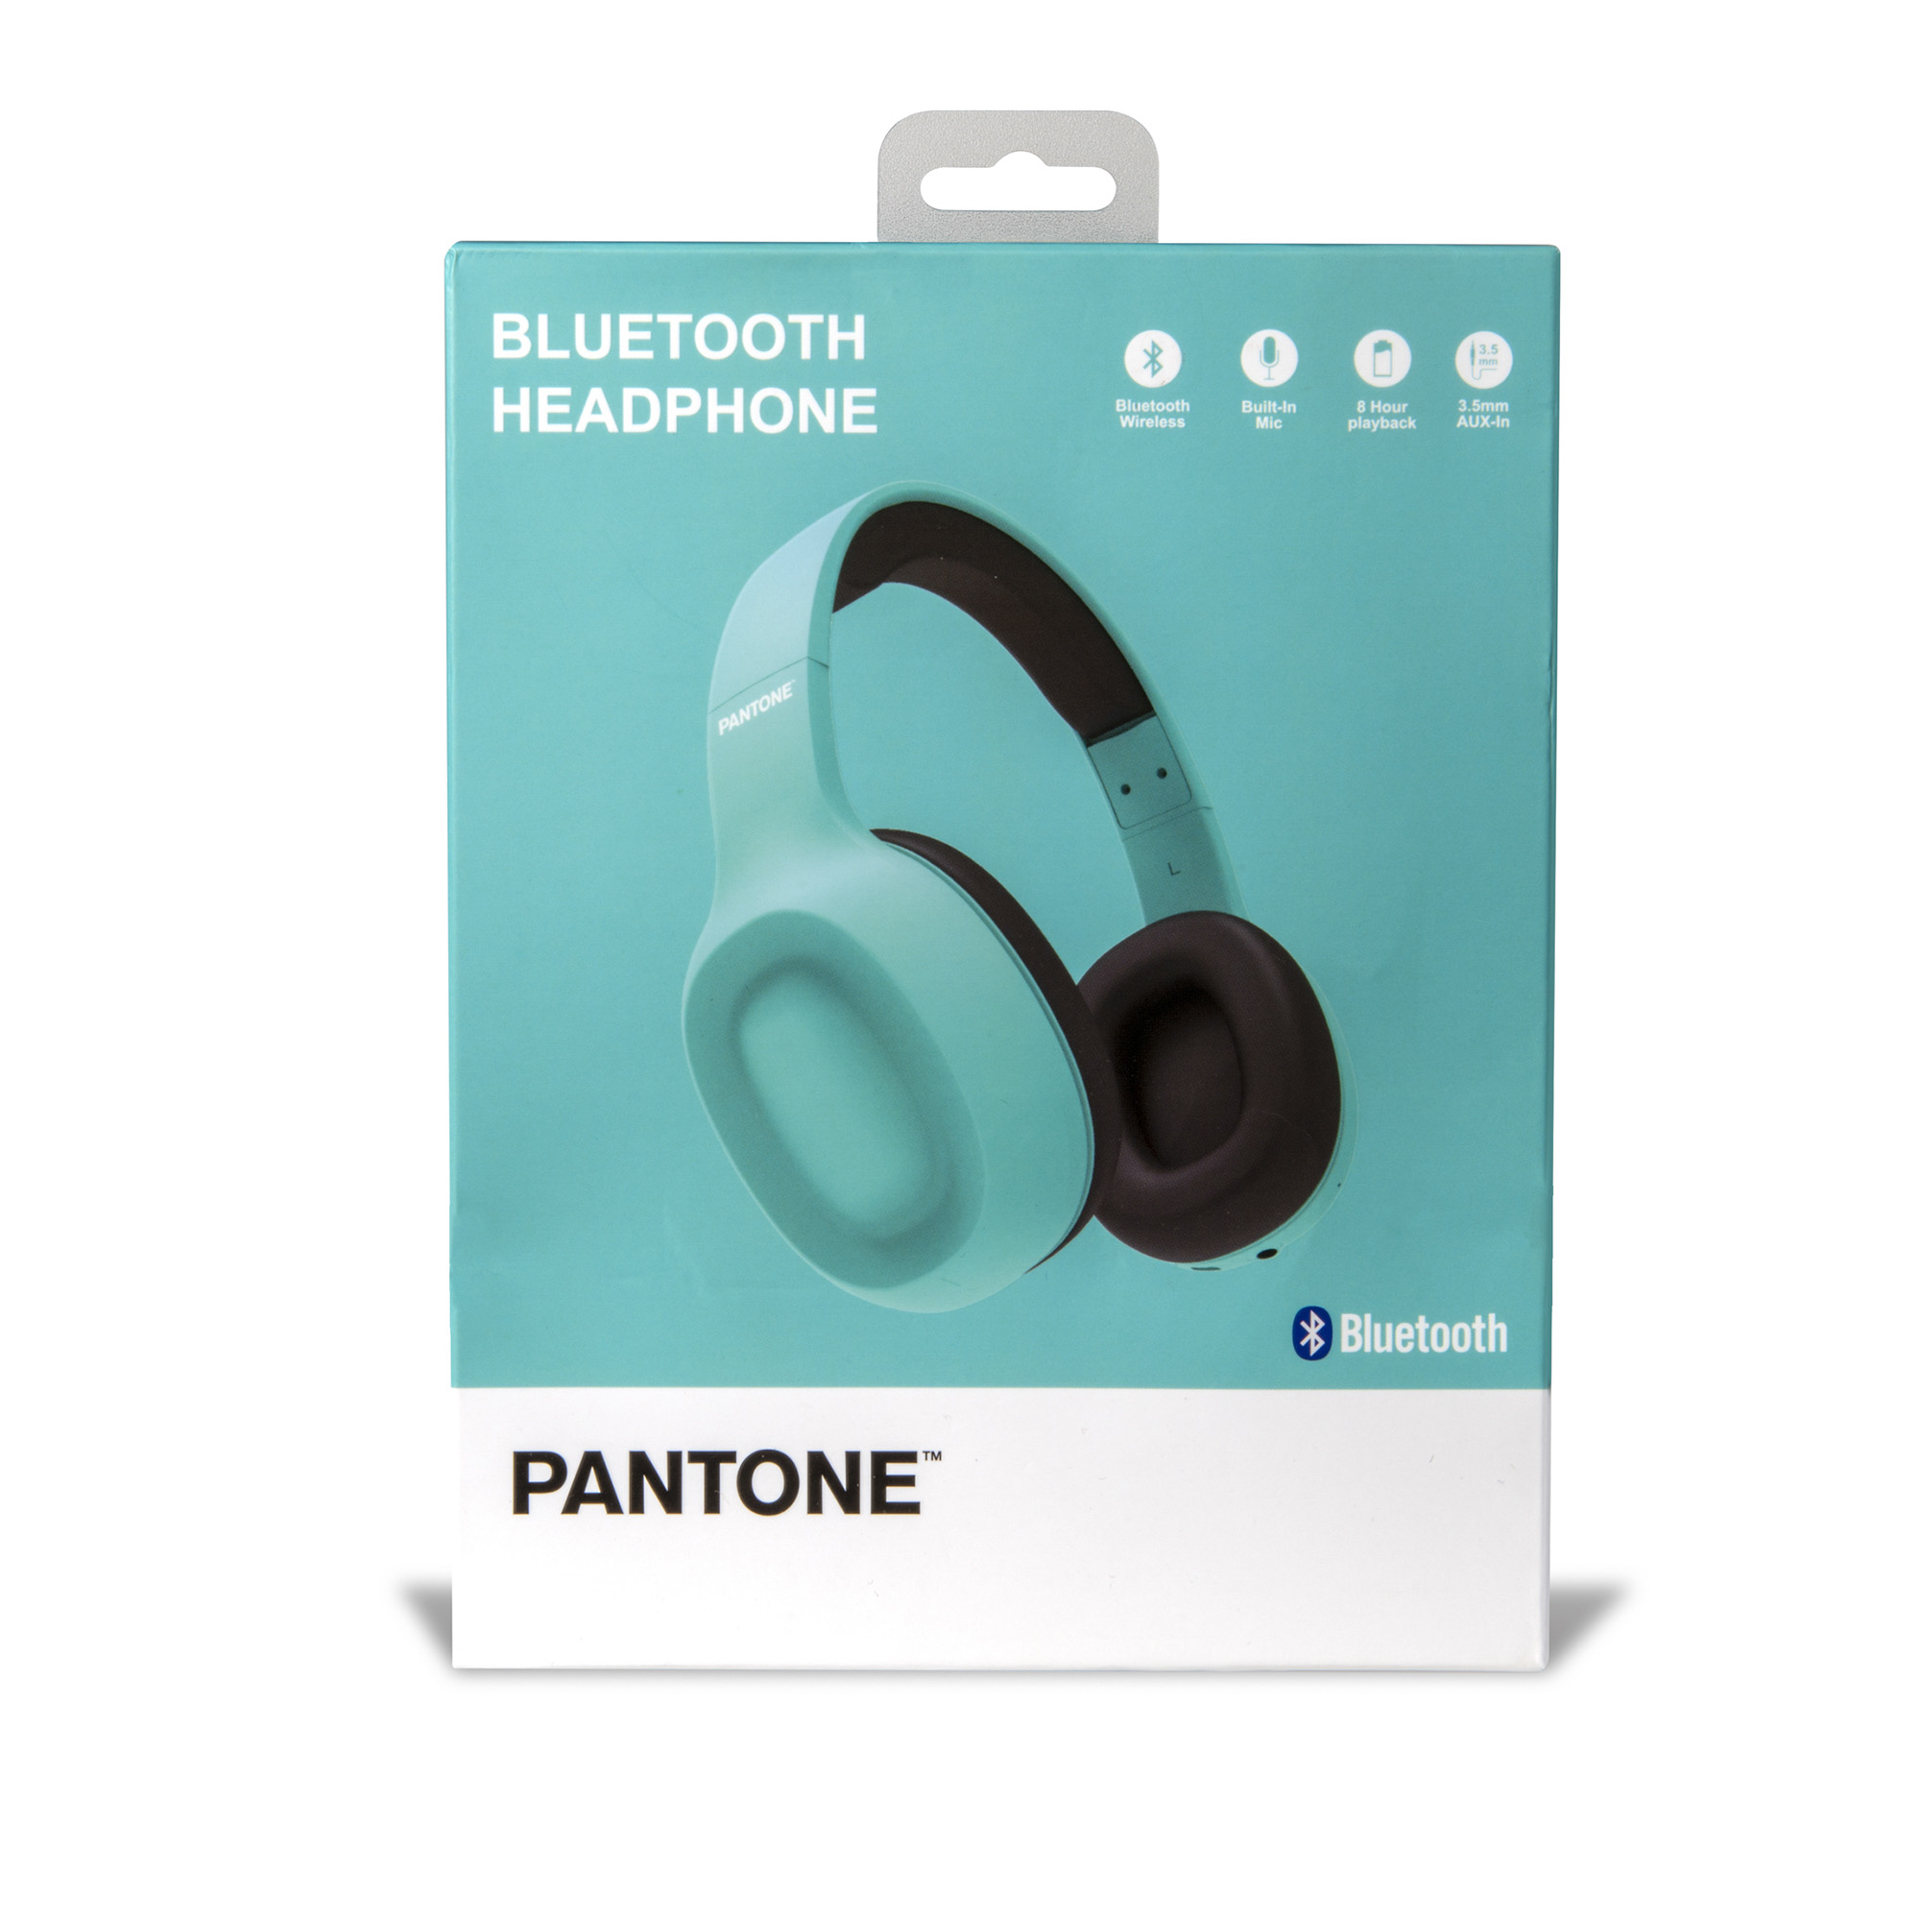 Cuffie Stereo Bluetooth Wireless Linea Pantone - Giallo, , large